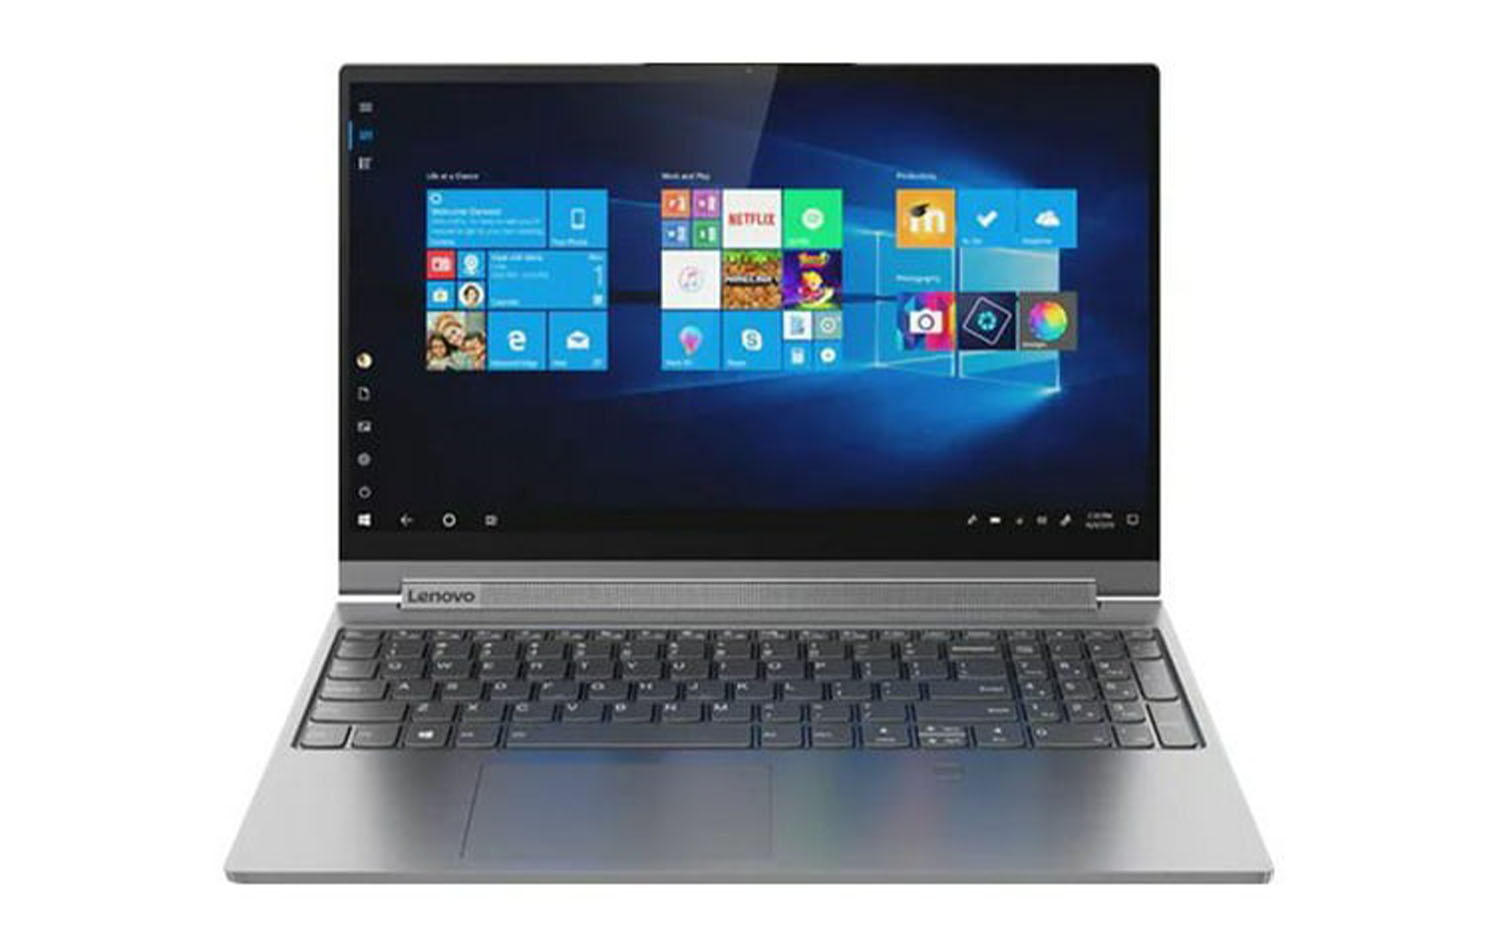 Lenovo Yoga C940-15I5RH  Intel Core i7 9th Gen 16GB RAM 512GB SSD Windows 10 Home Touchscreen NVIDIA GeForce GTX 1650